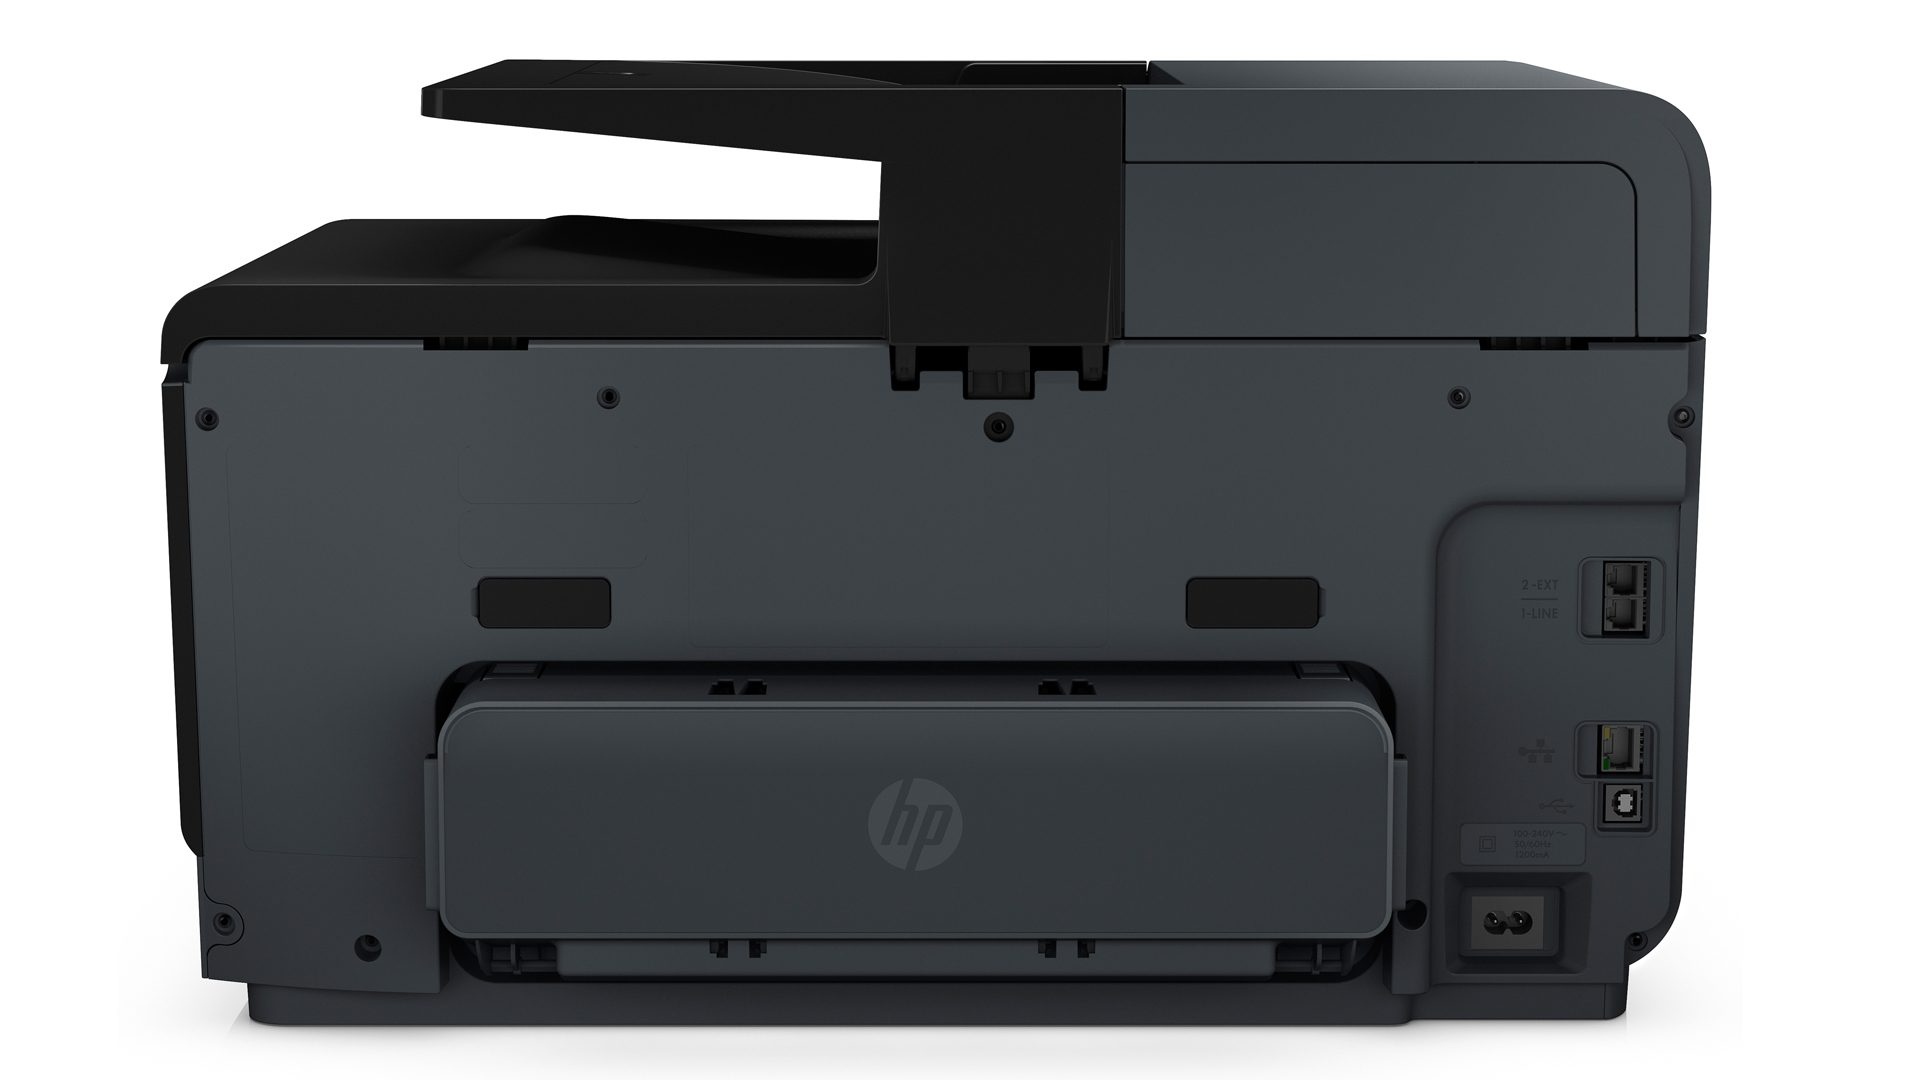 HP-Officejet-Pro-8620—Anischten-4